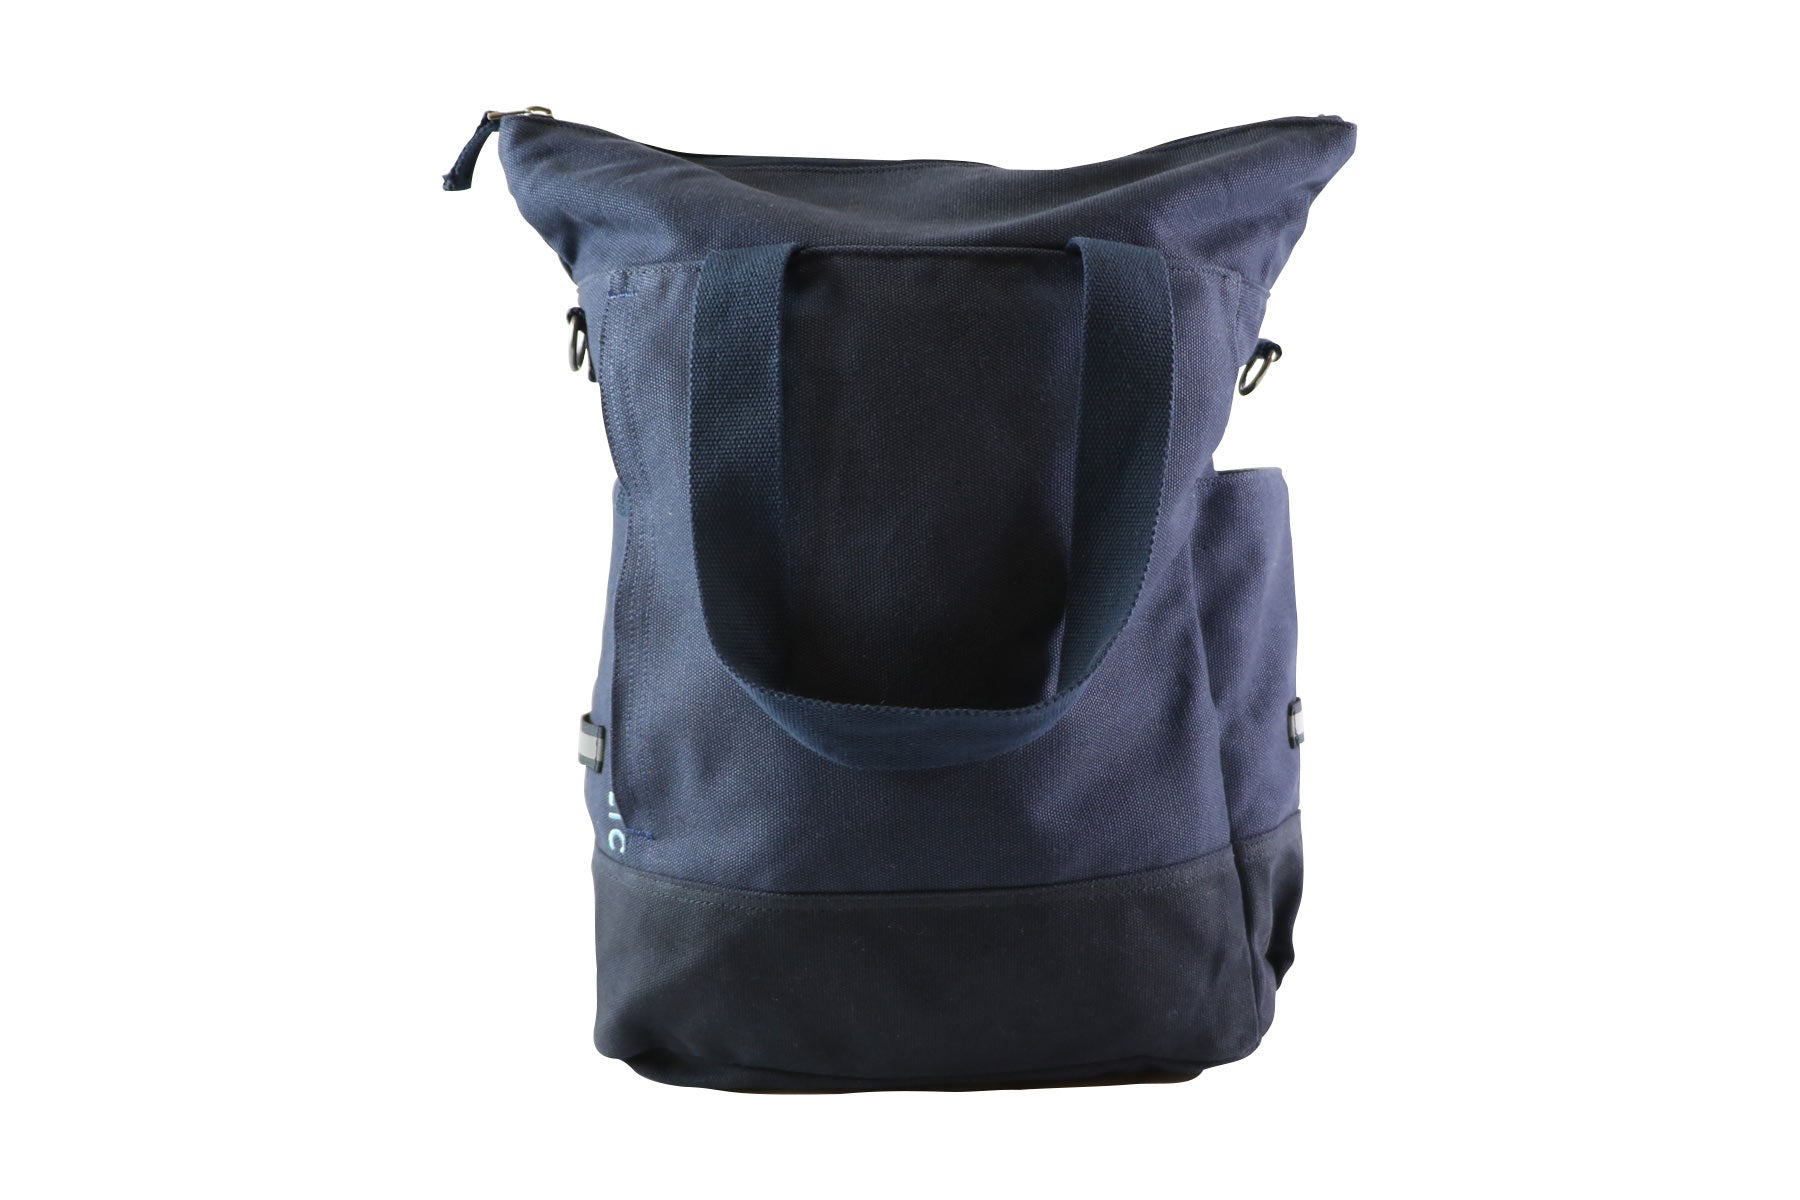 Clipa Bag Hanger: Perfect Travel Companion [PLUS GIVEAWAY